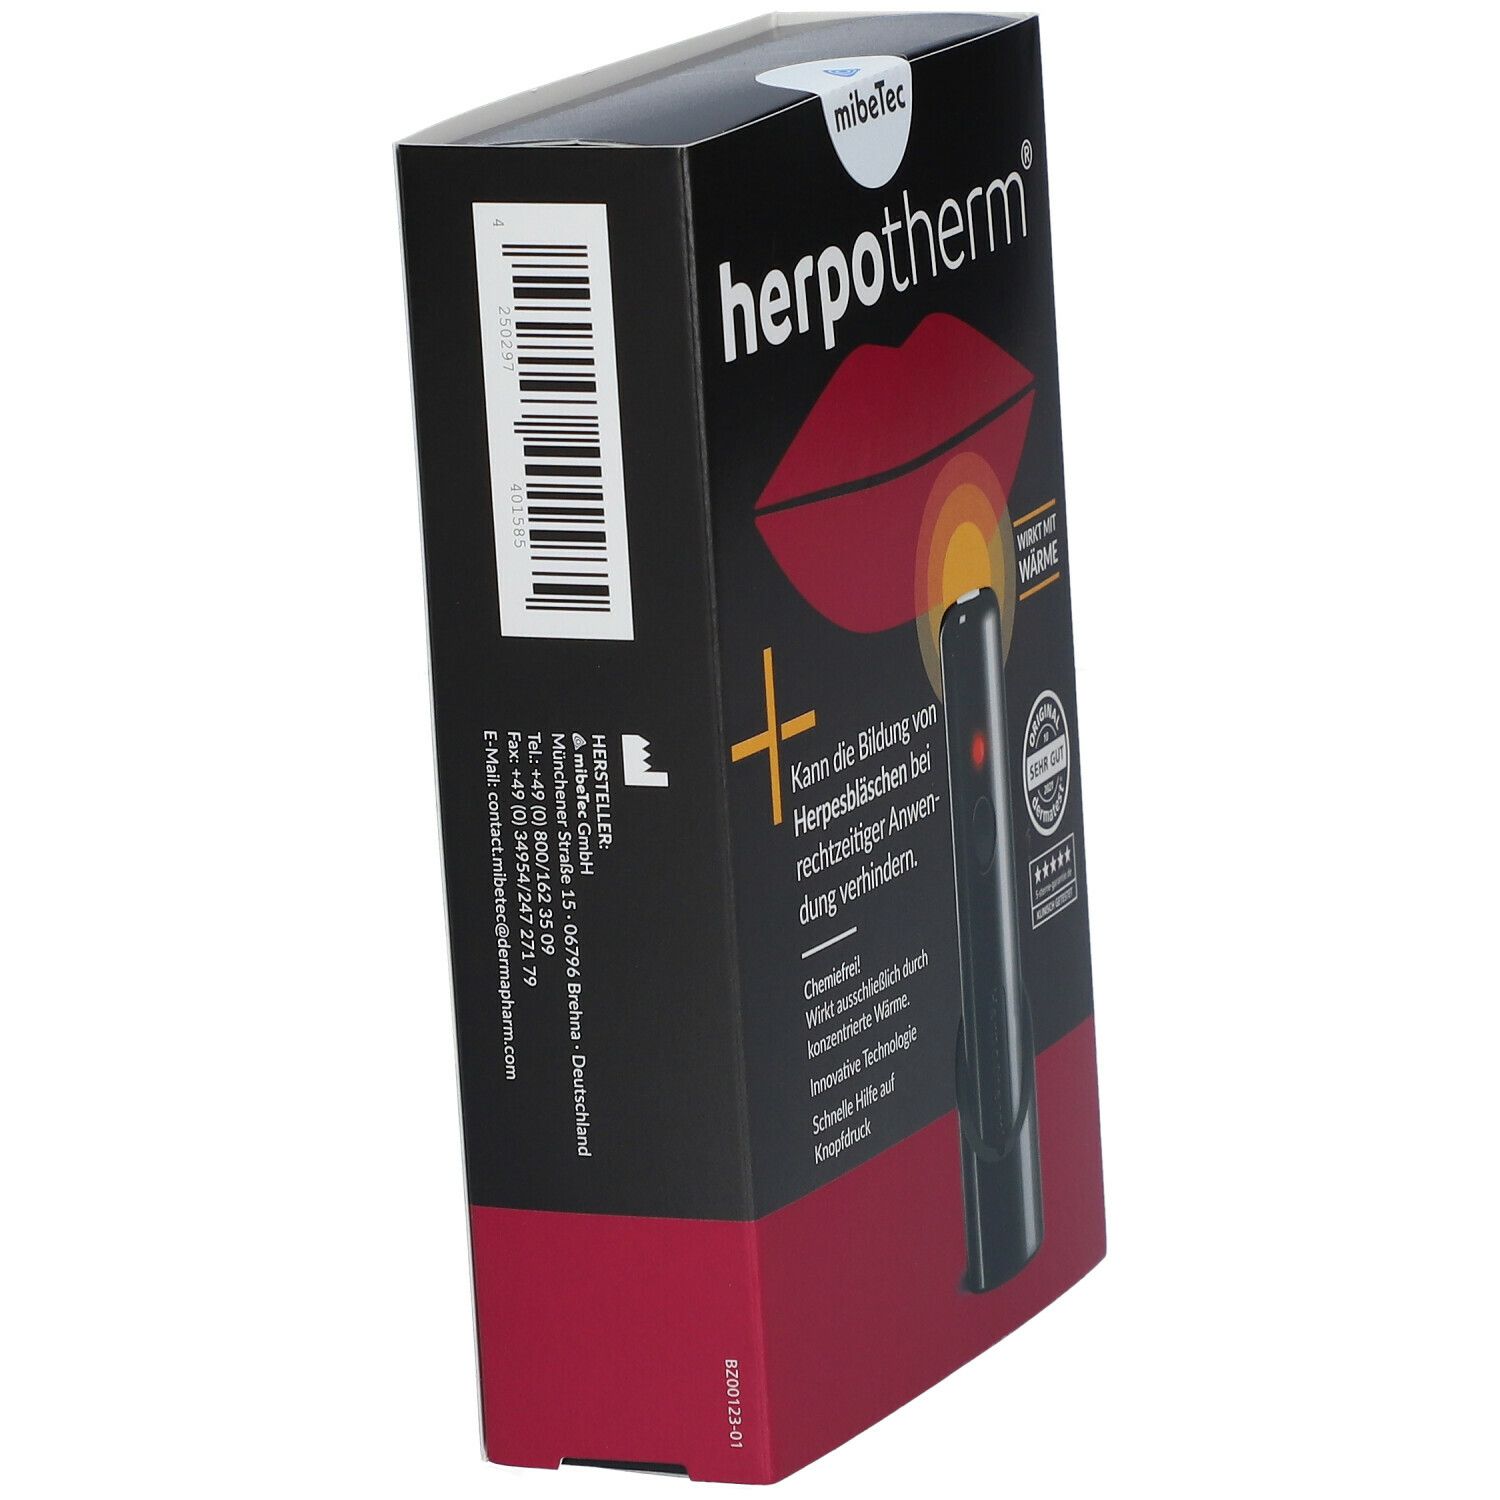 Herpotherm® Original